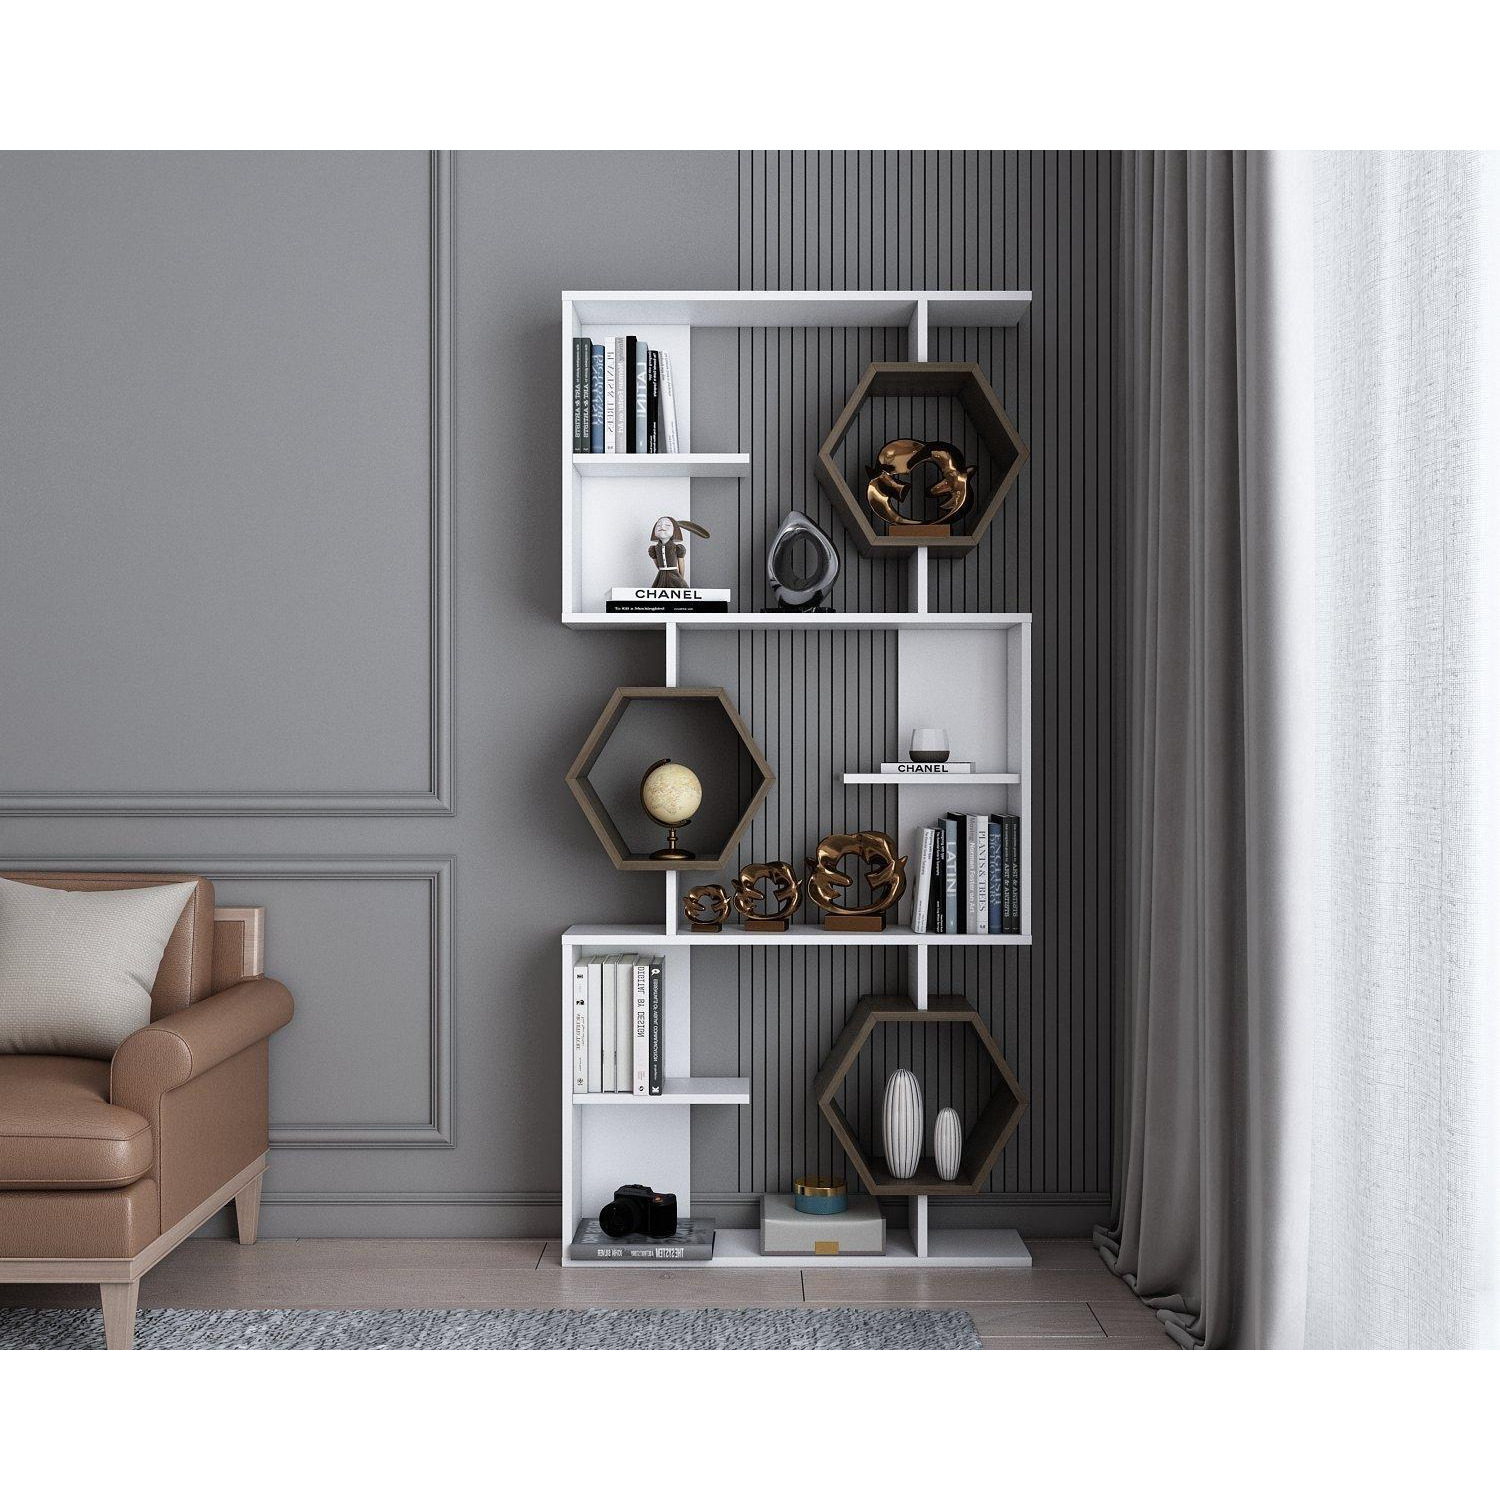 Darla Bookcase, Bookshelf, Shelving Unit, Display Unit - image 1